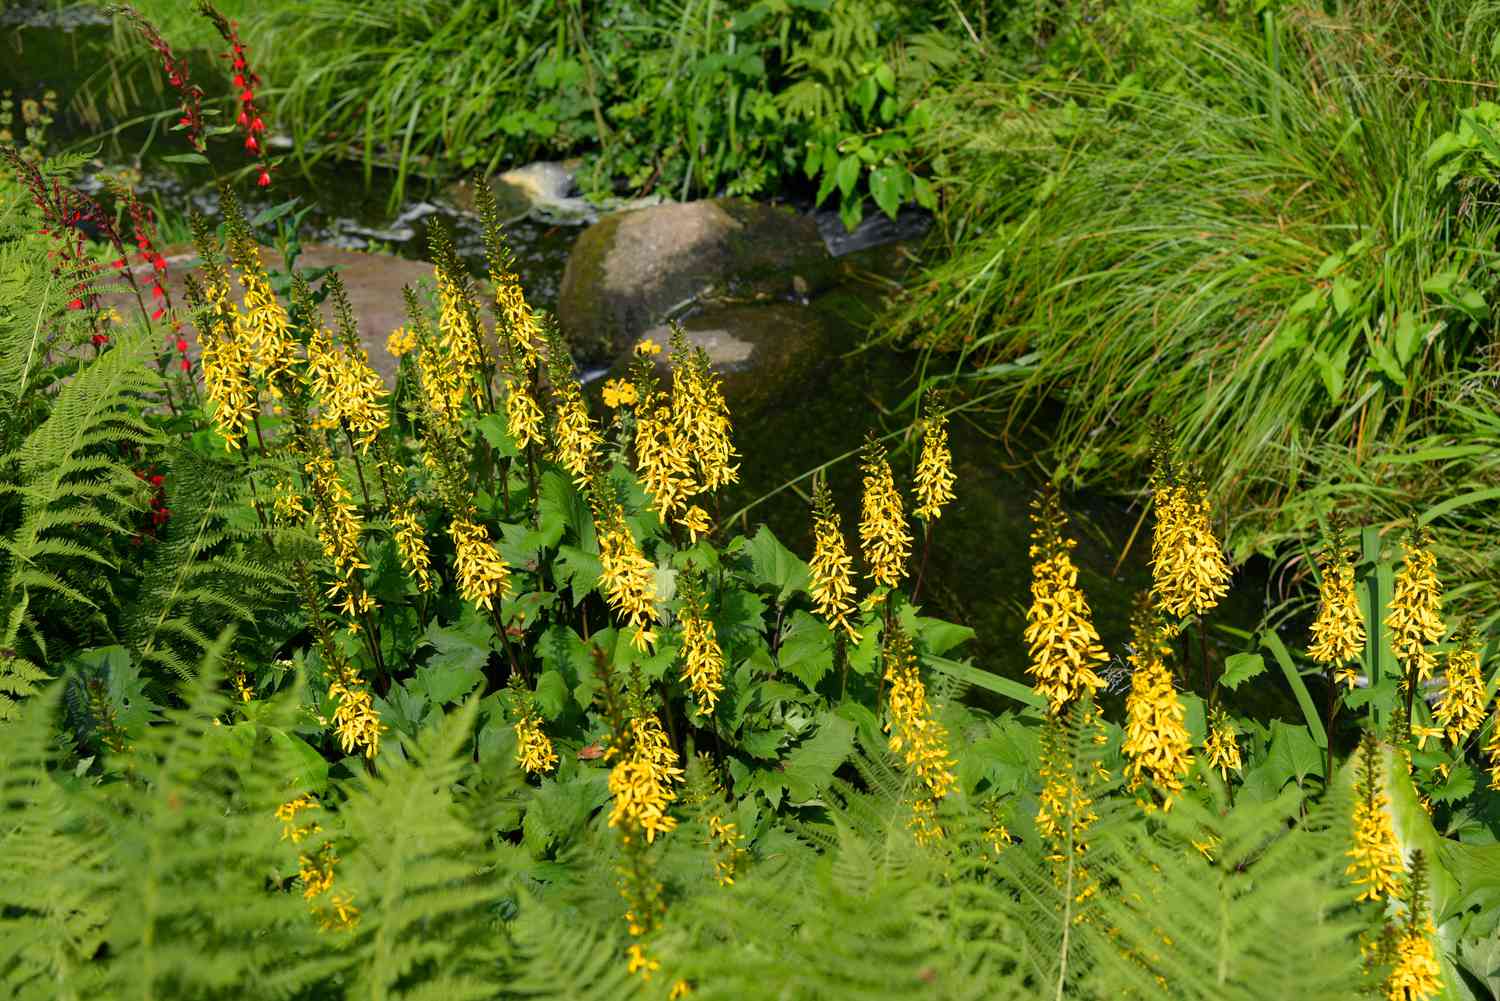 Ligularia plant with yellow flower spikes in bog garden